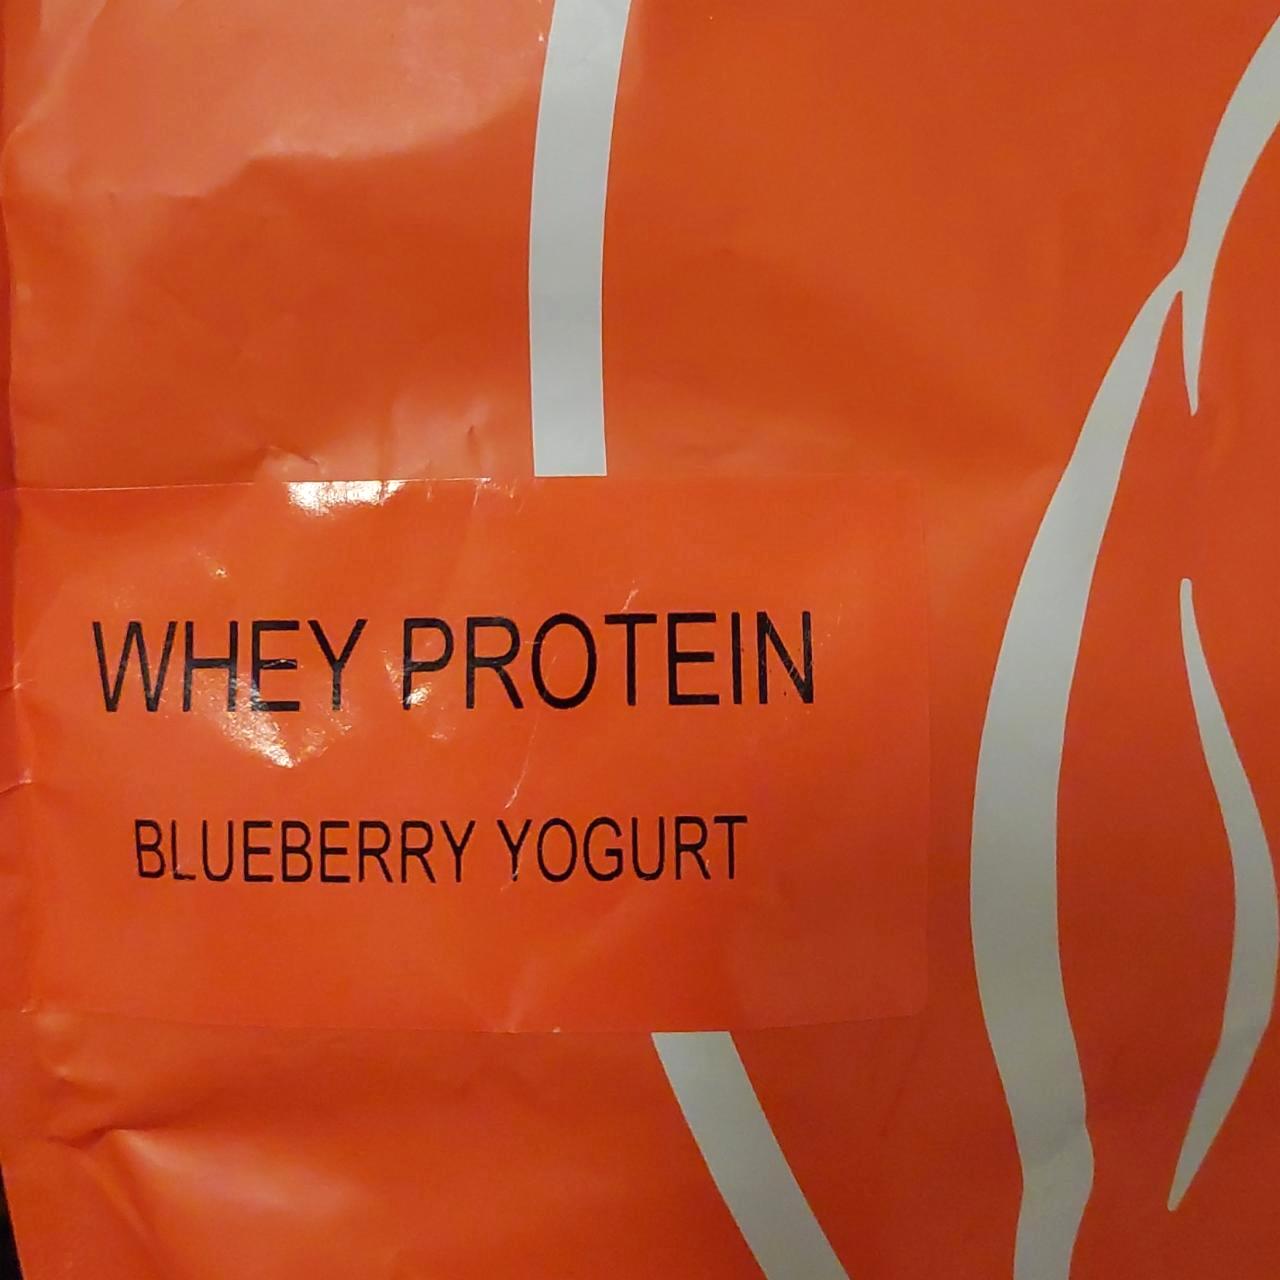 Képek - Whey protein Blueberry yogurt Still Mass